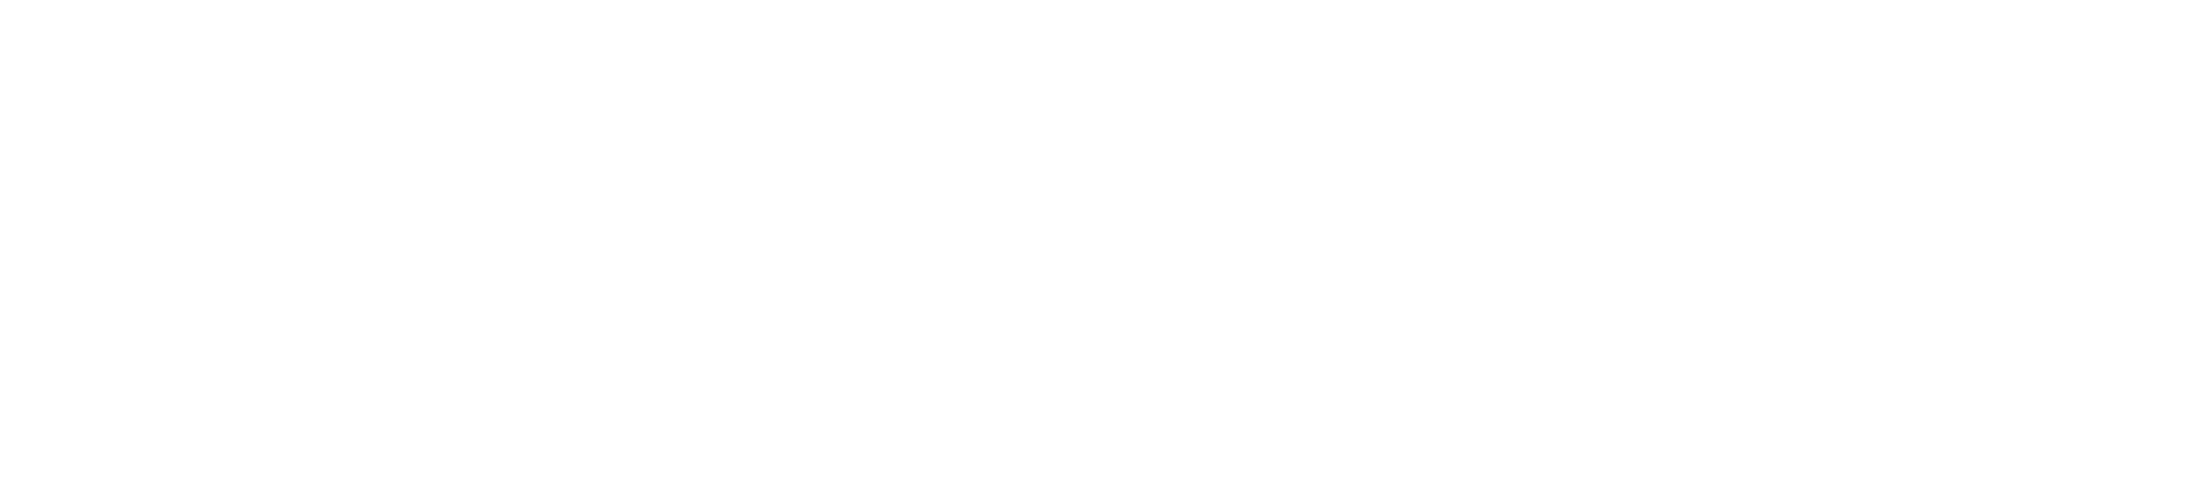 isopan-logo-white